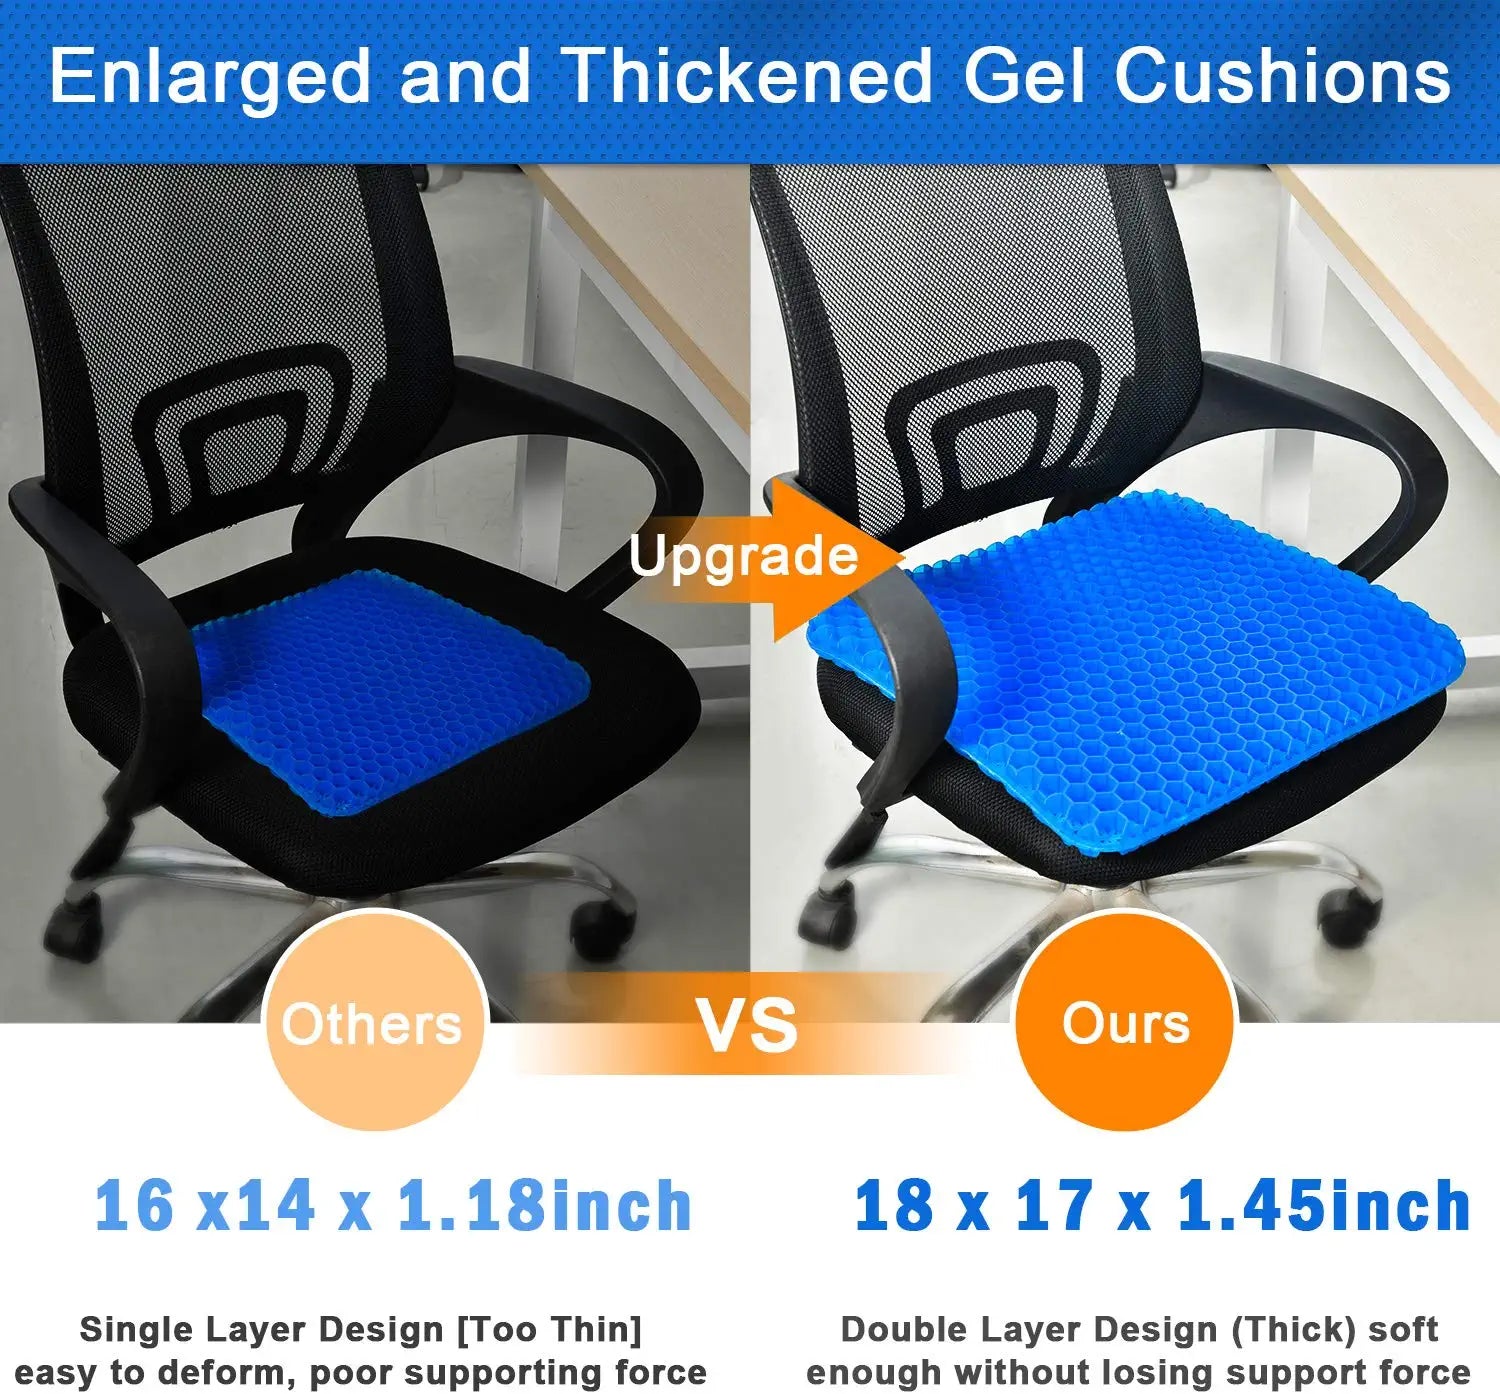 Gel Seat Cushion for Long Sitting, Seat Cushion for Office Chair, Gel Chair Cushion for Desk Chair, Pressure Relief Gel Cushion Firm Coccyx Cushion